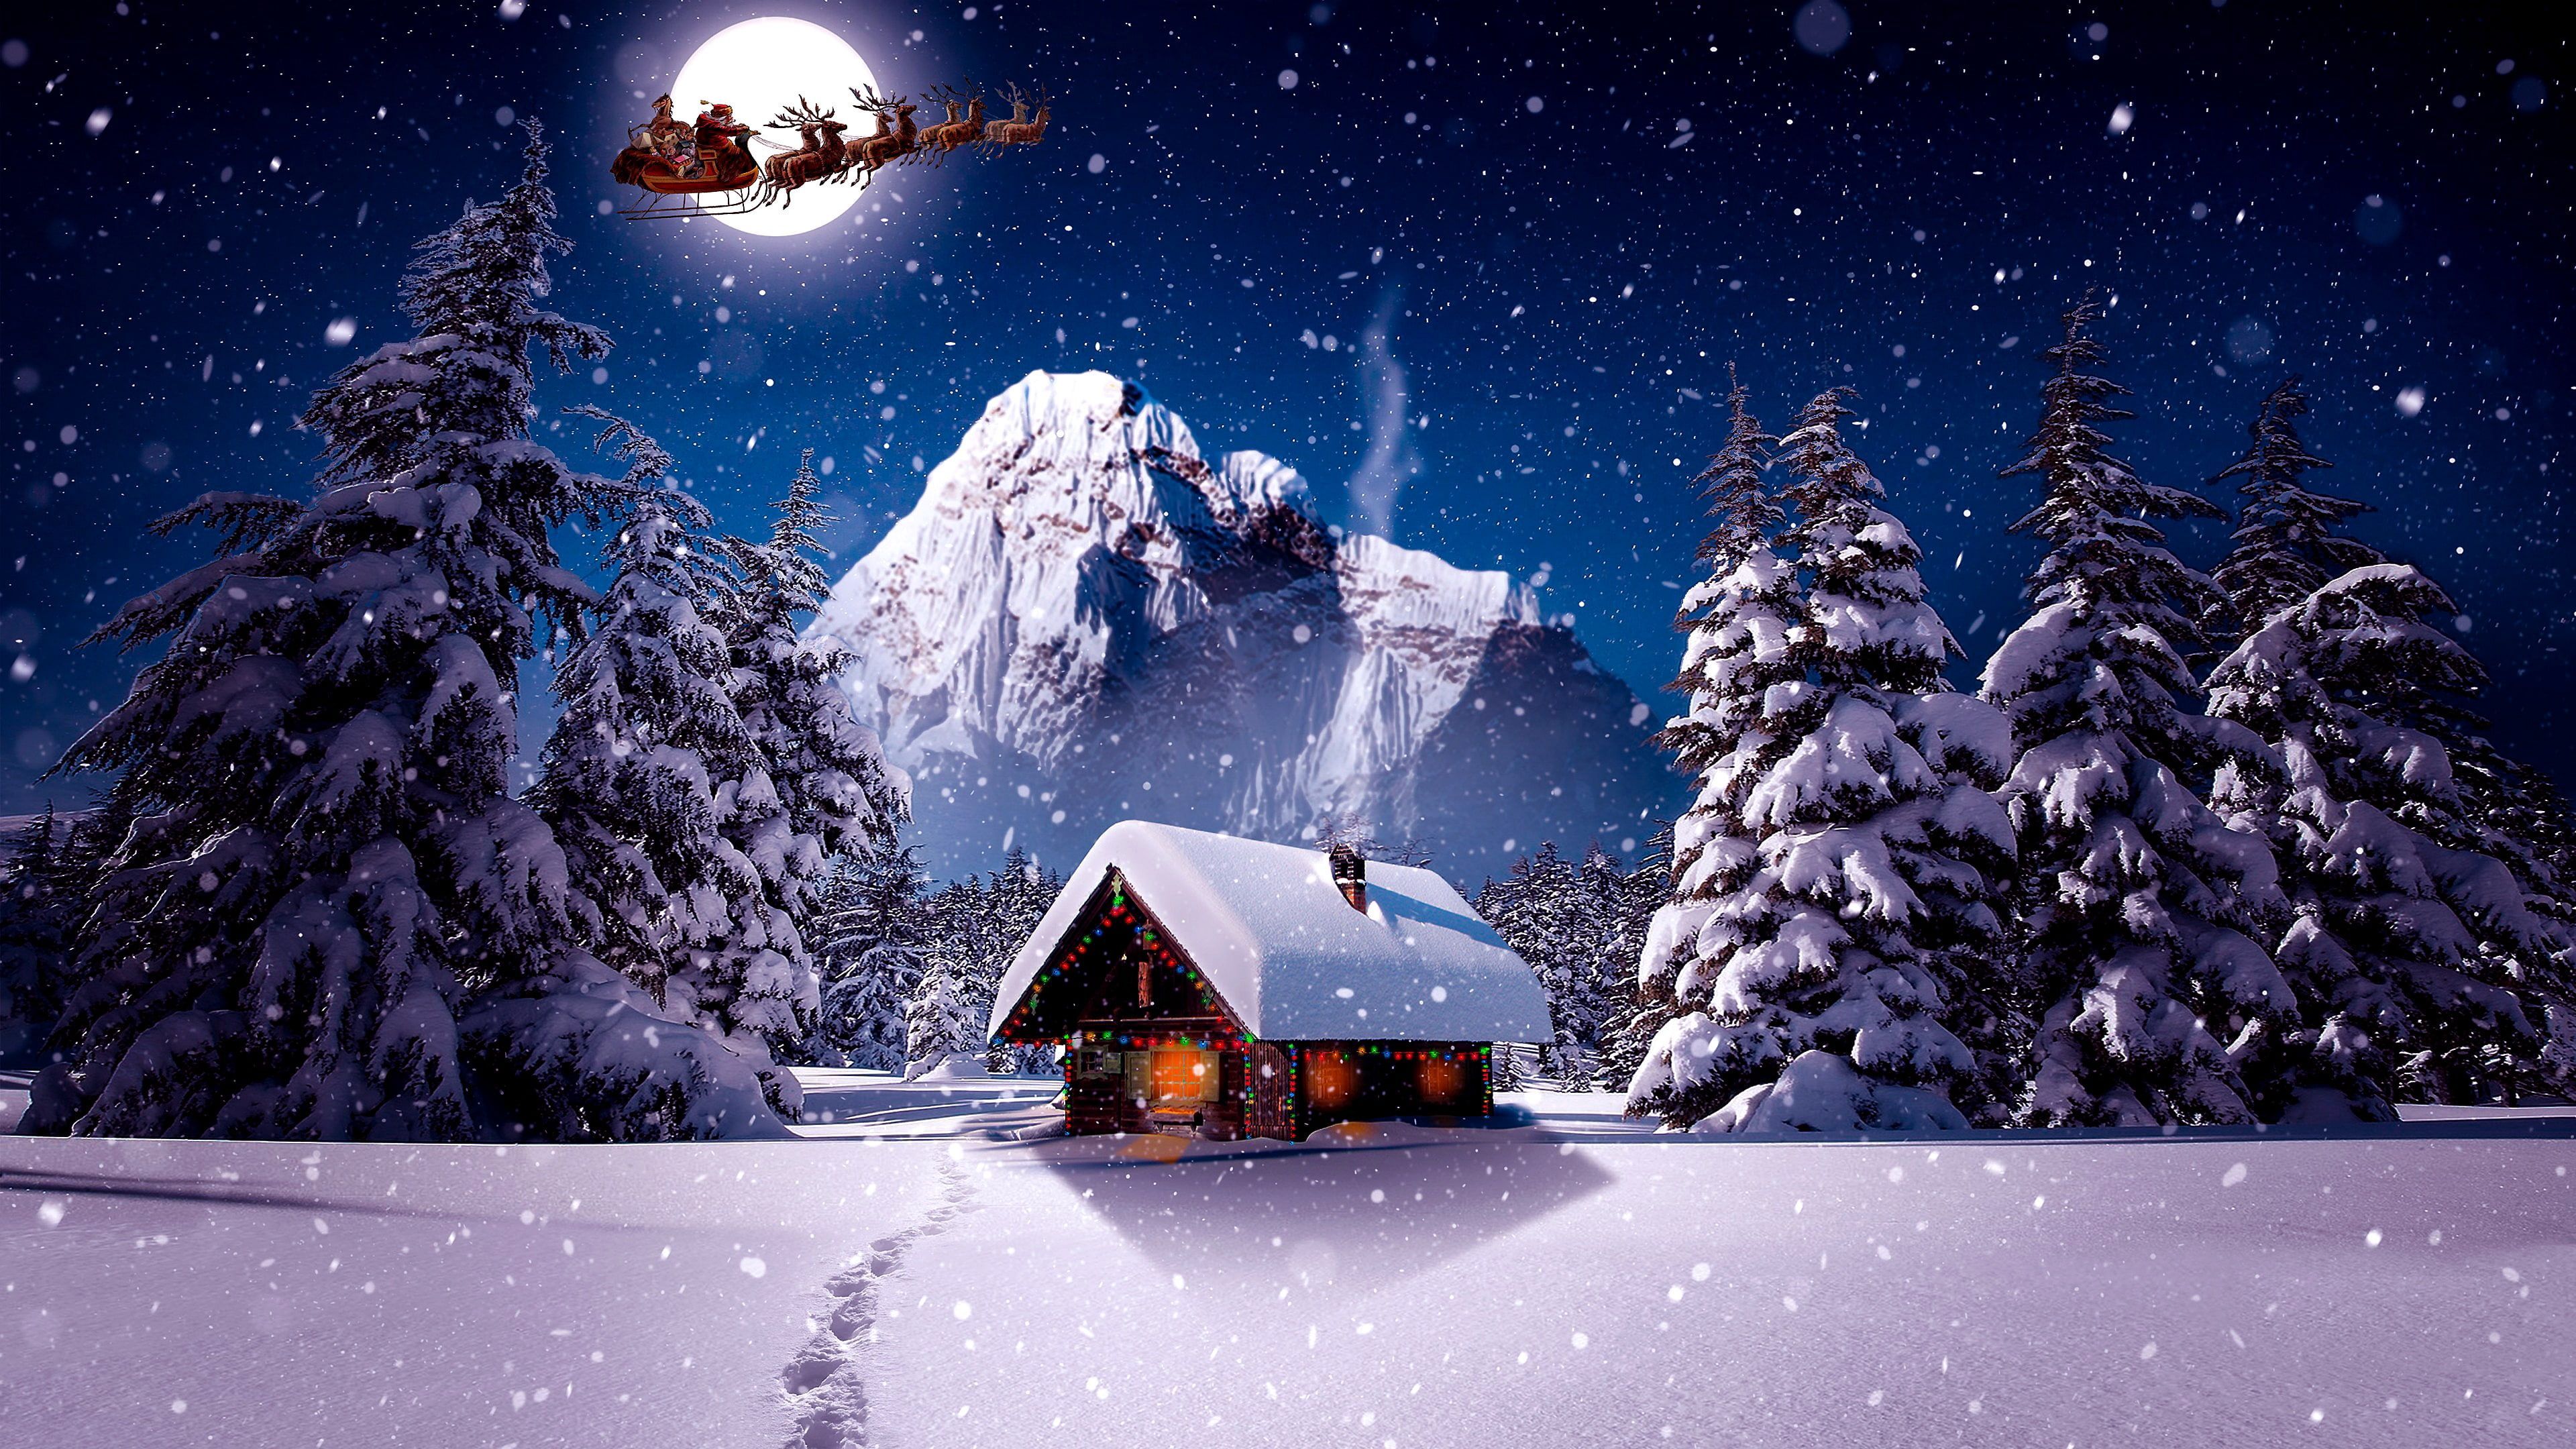 winter santa claus #sleigh #sledge #snow #snowing #moon log cabin #house #mountain christmas night #chistmas. Nature wallpaper, Christmas wallpaper, Wallpaper